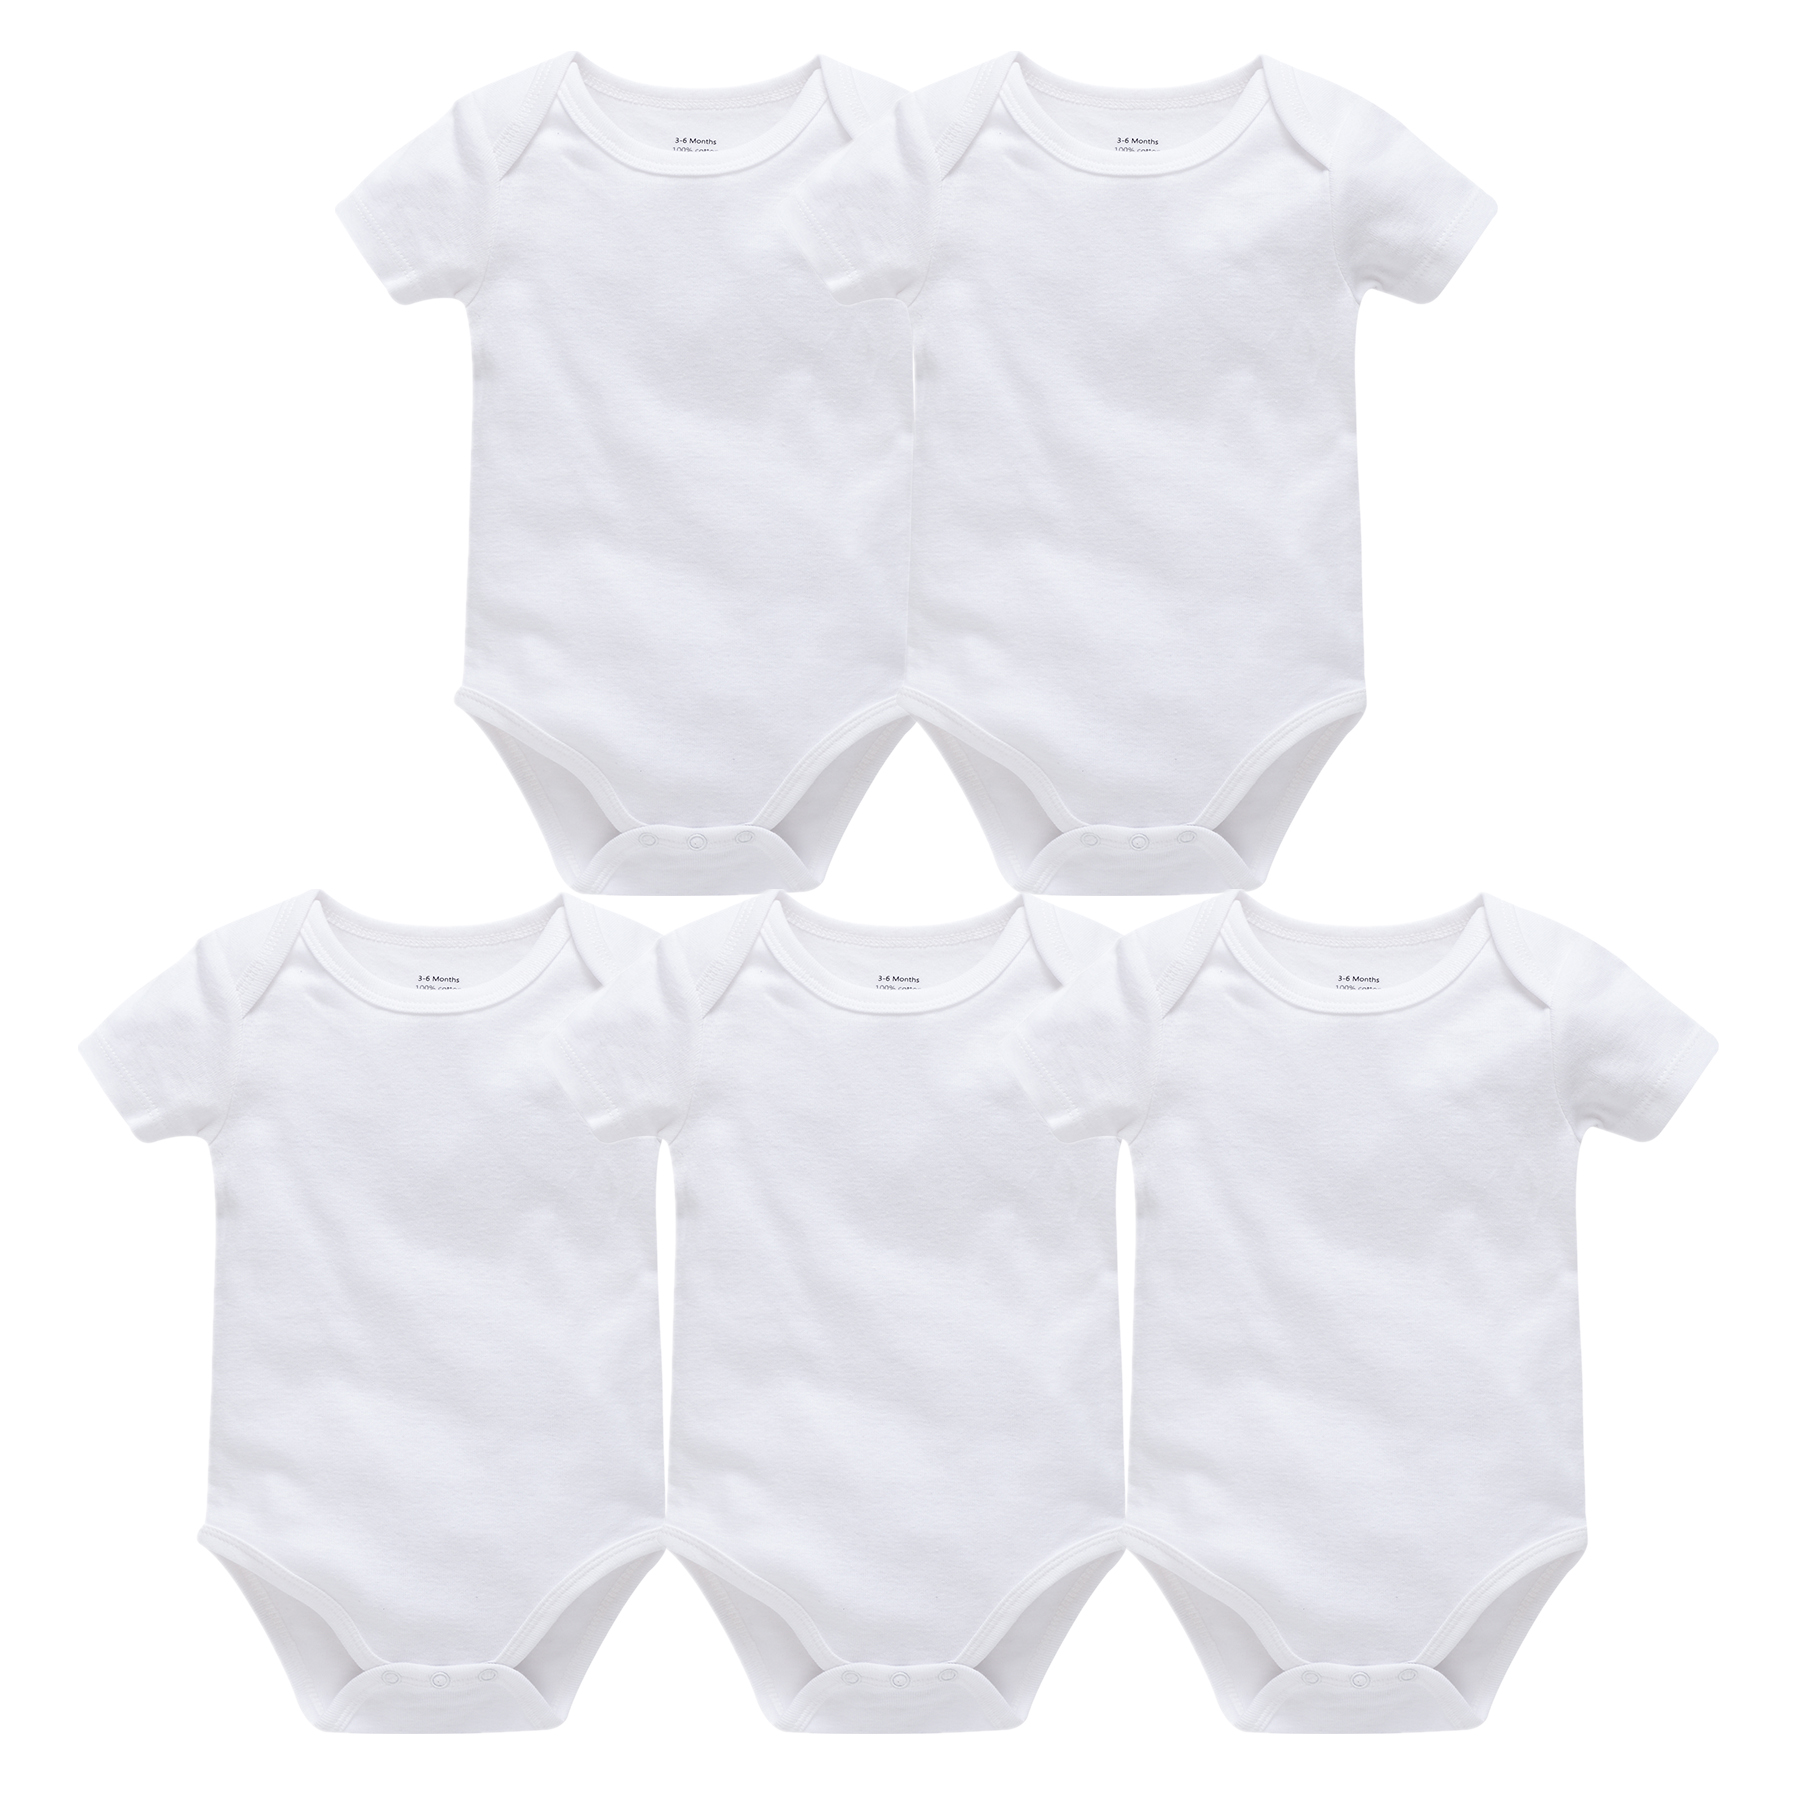 Toddler Baby Clothing Cotton Summer Boy Sleepsuit Girl Bodysuit Newborn Onesie Infant Sweatshirt Jumper roupa de beb